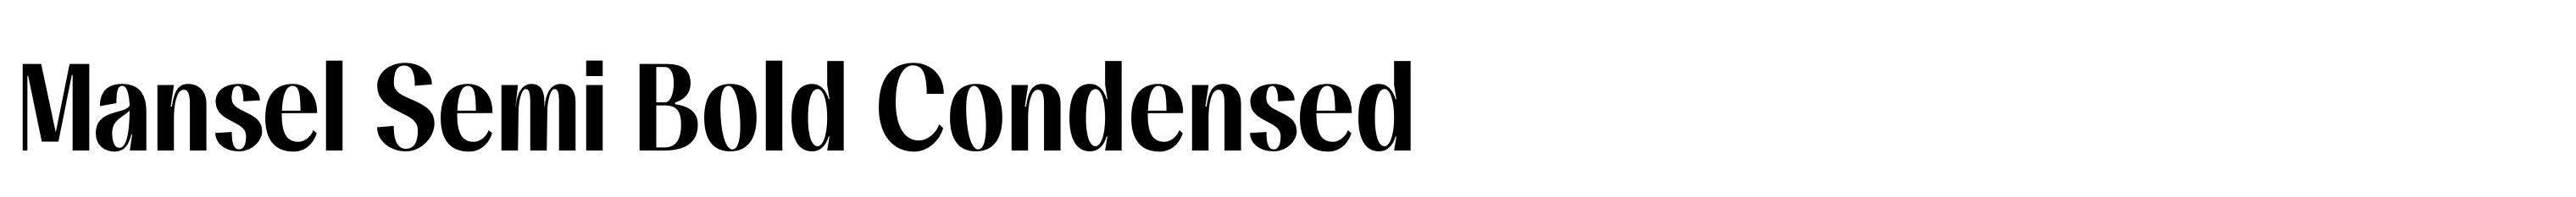 Mansel Semi Bold Condensed